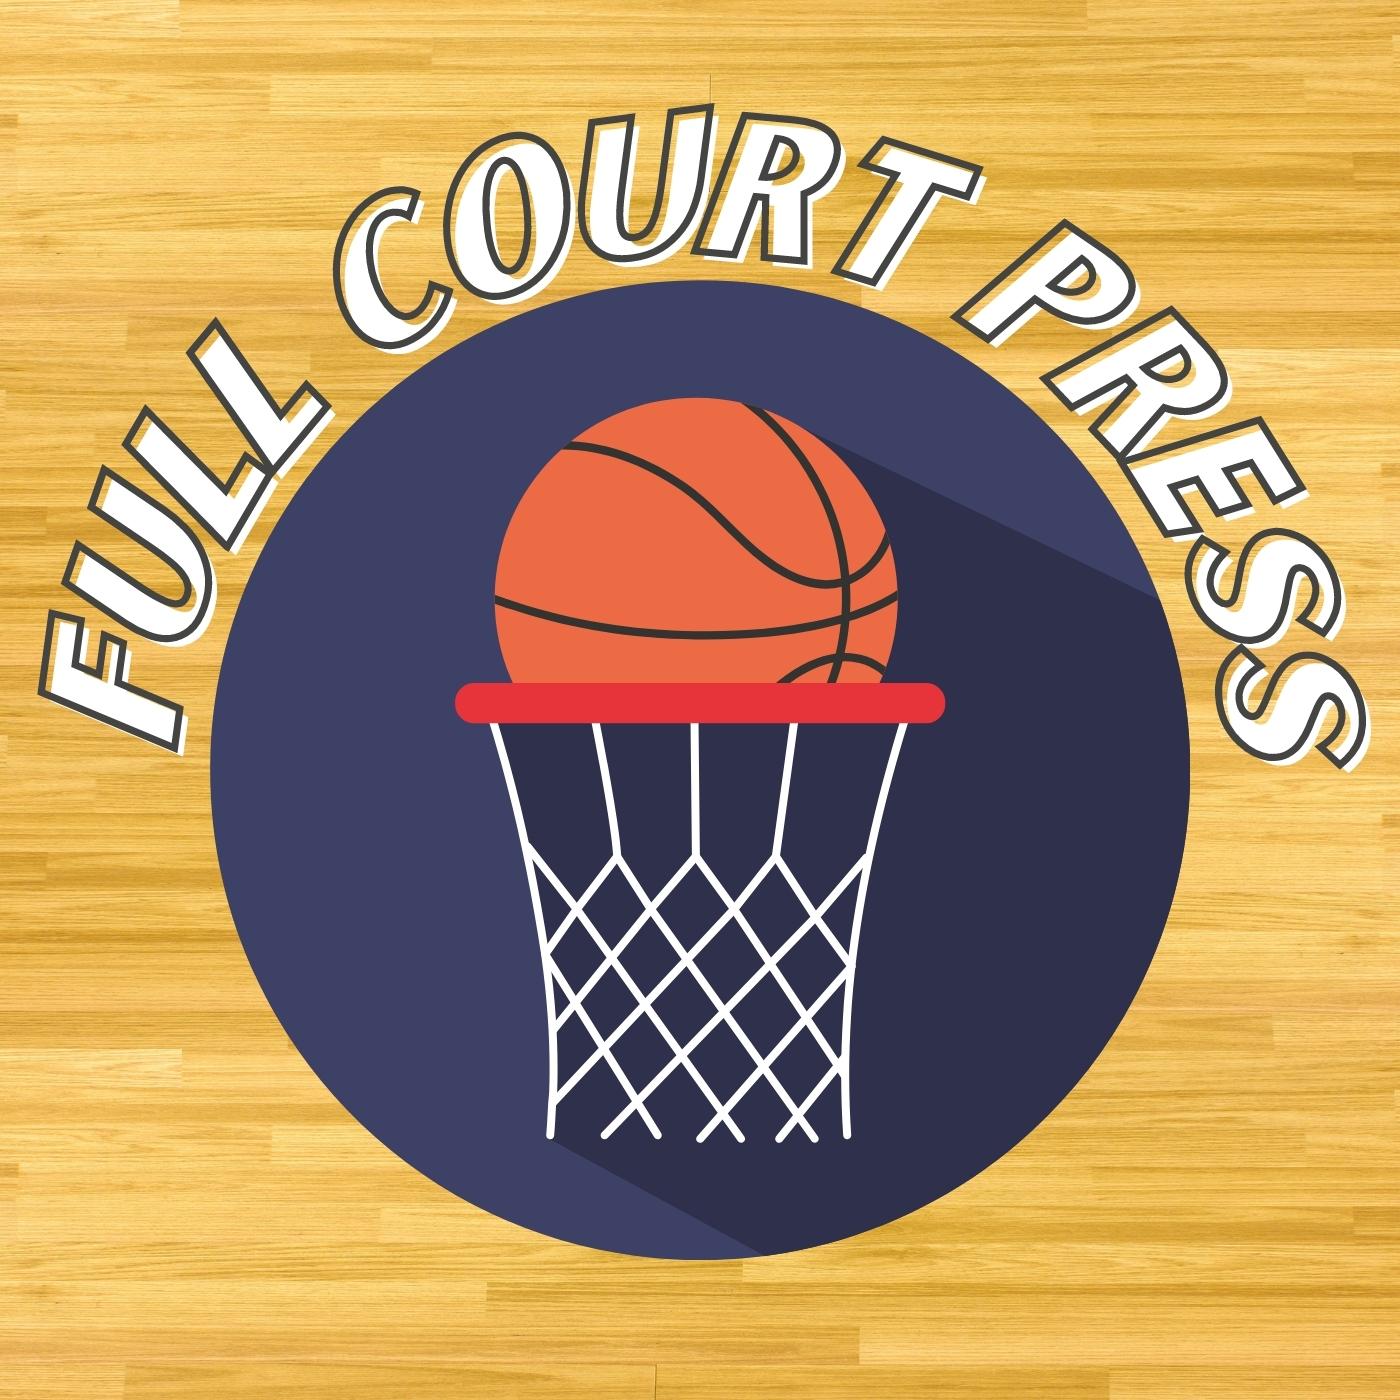 Full Court Press S02.E16 - NBA Award Predictions